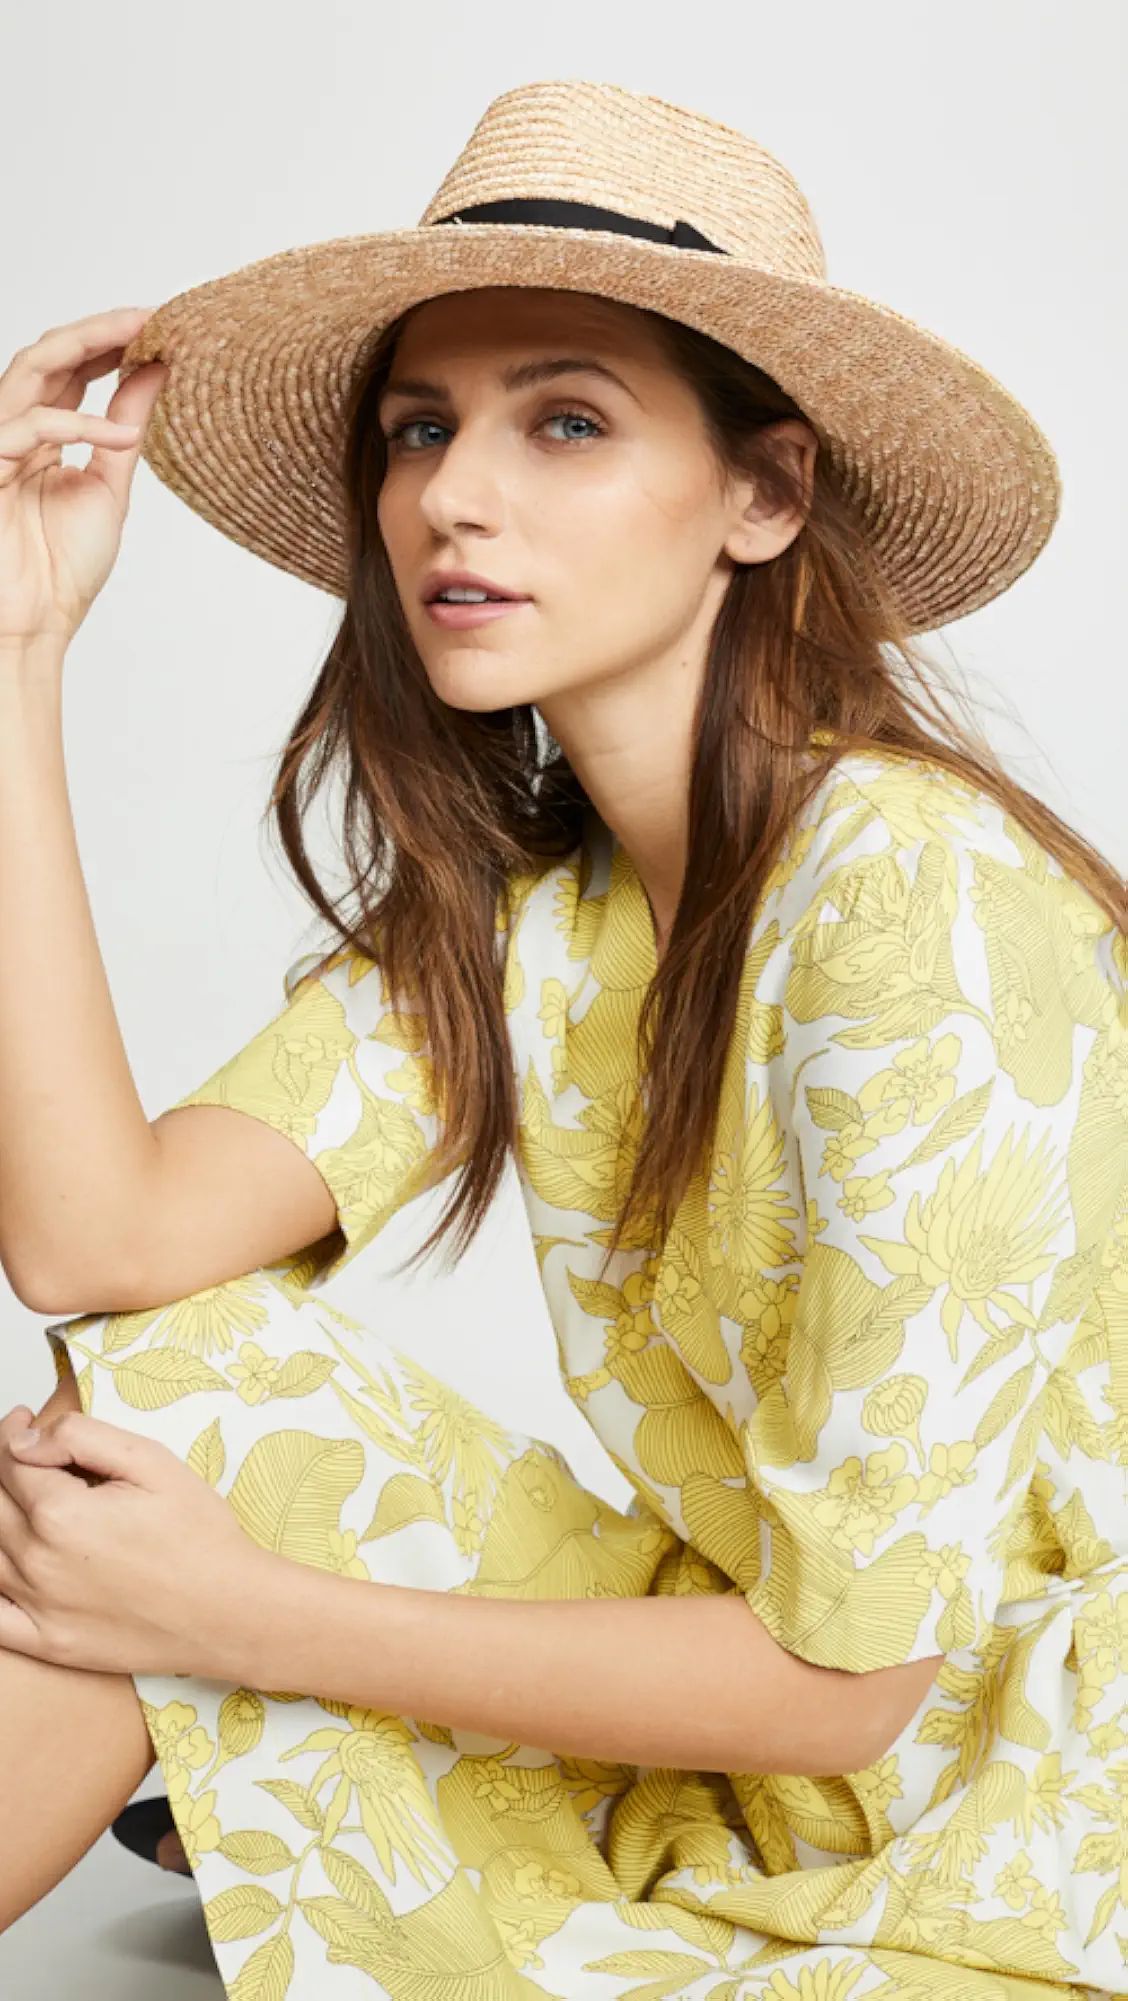 Joanna Hat | Shopbop